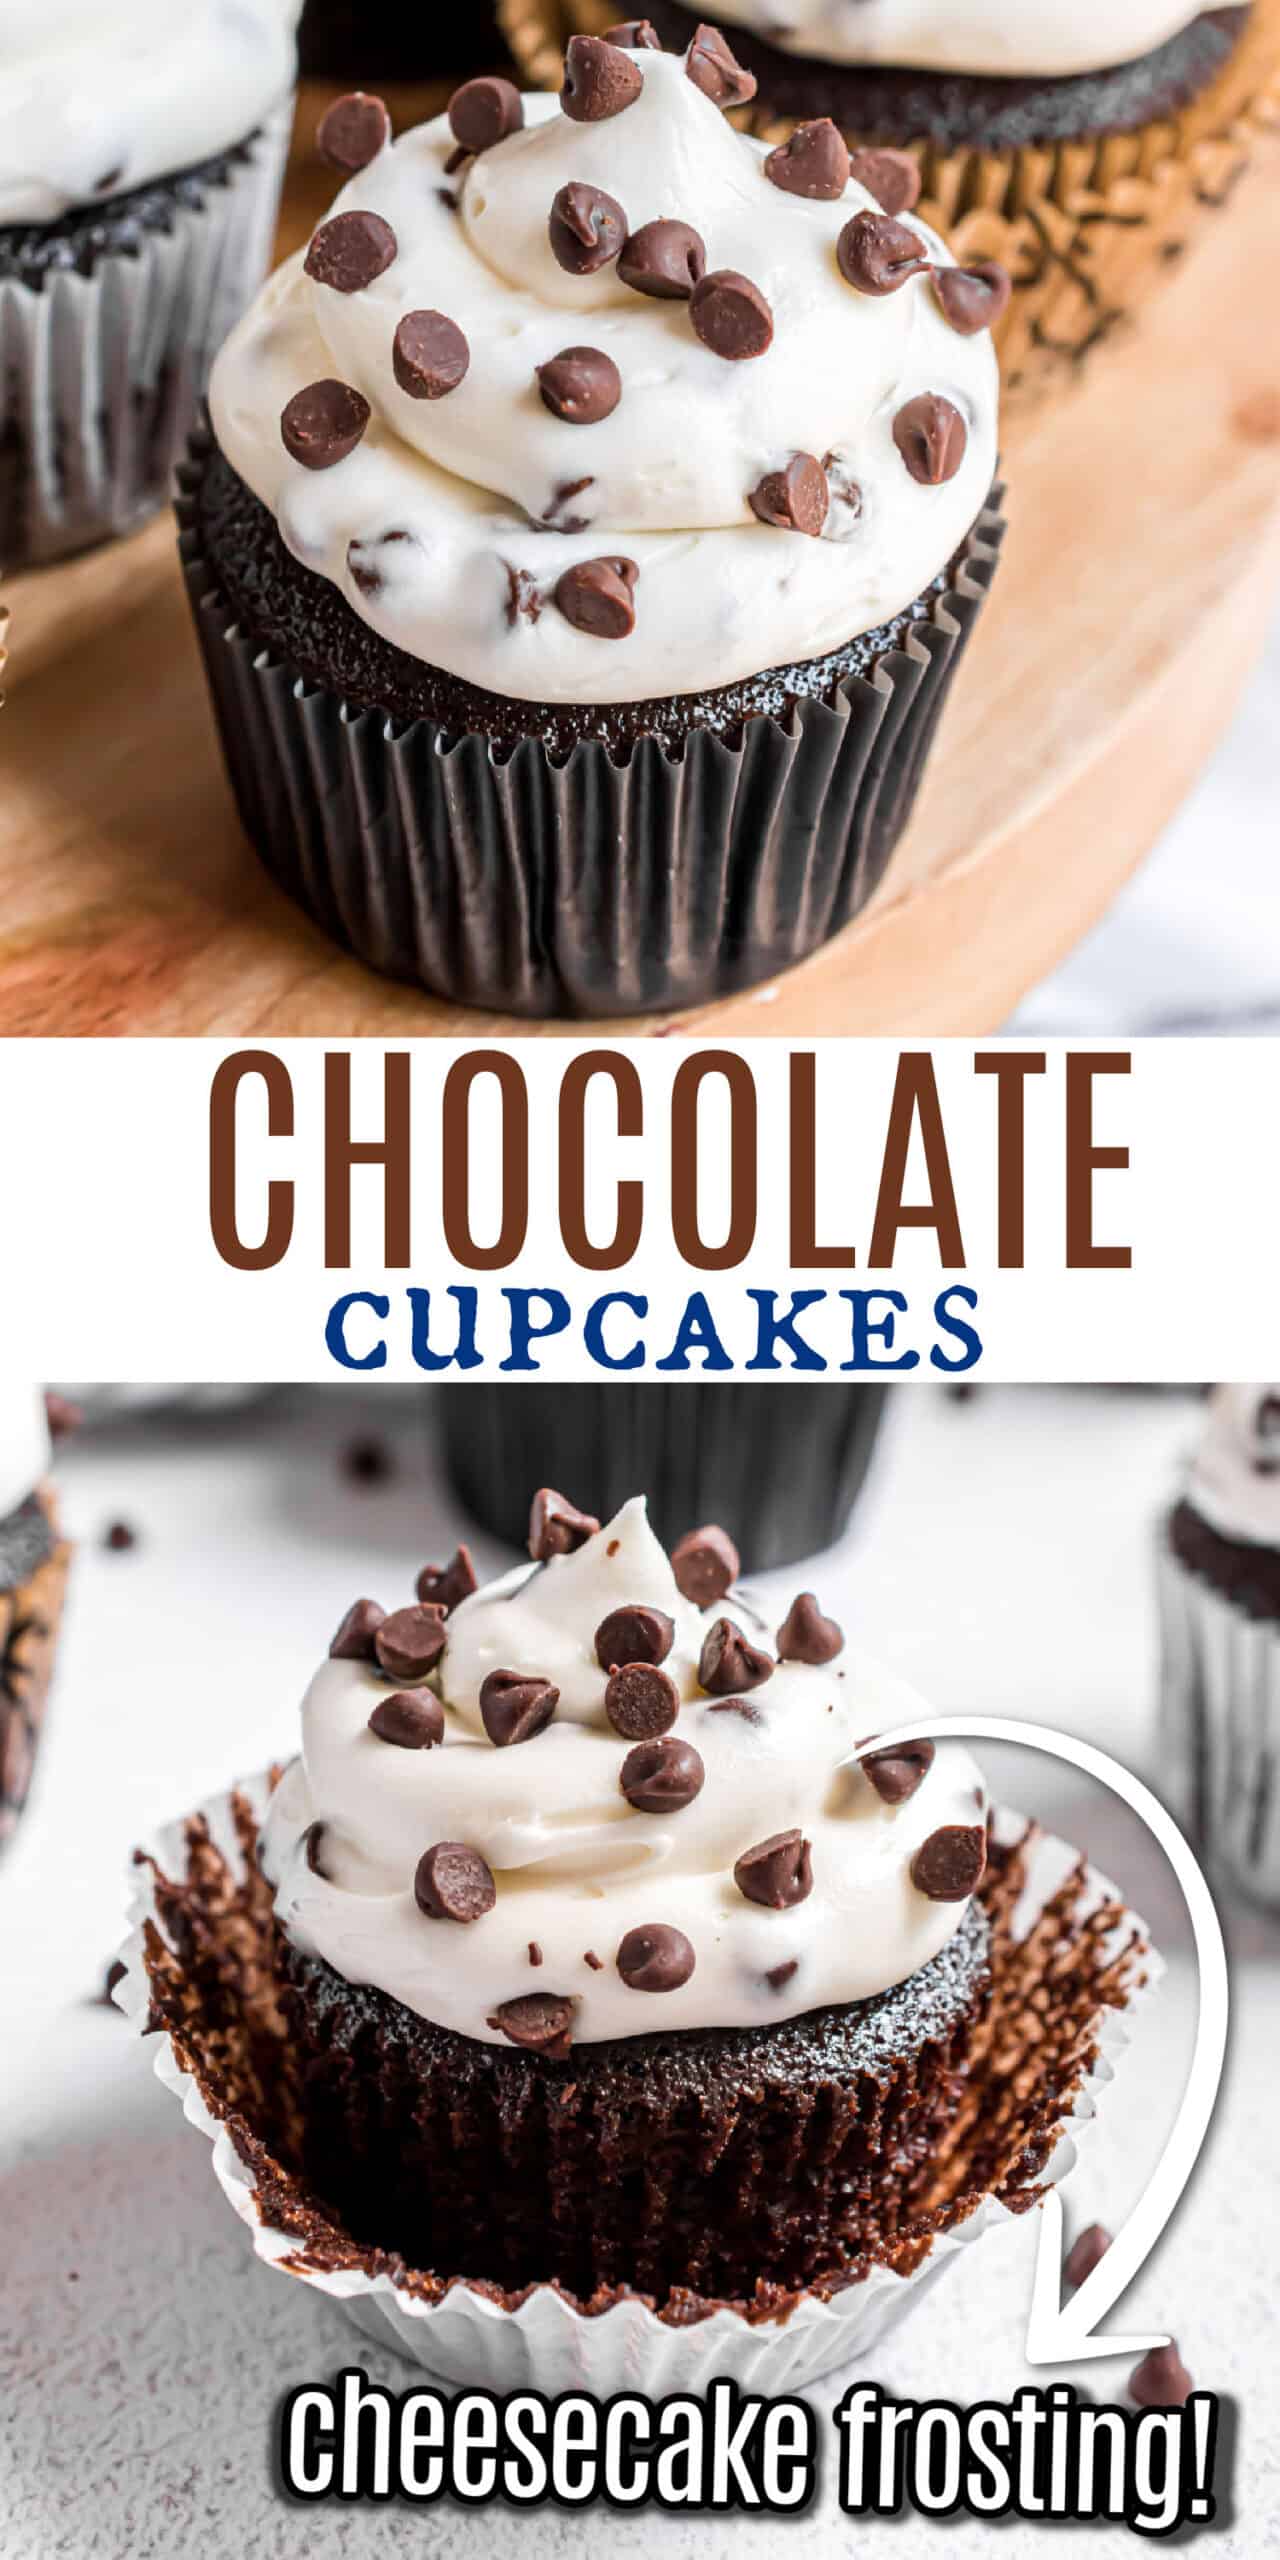 Chocolate Chip Cheesecake Cupcakes - Shugary Sweets